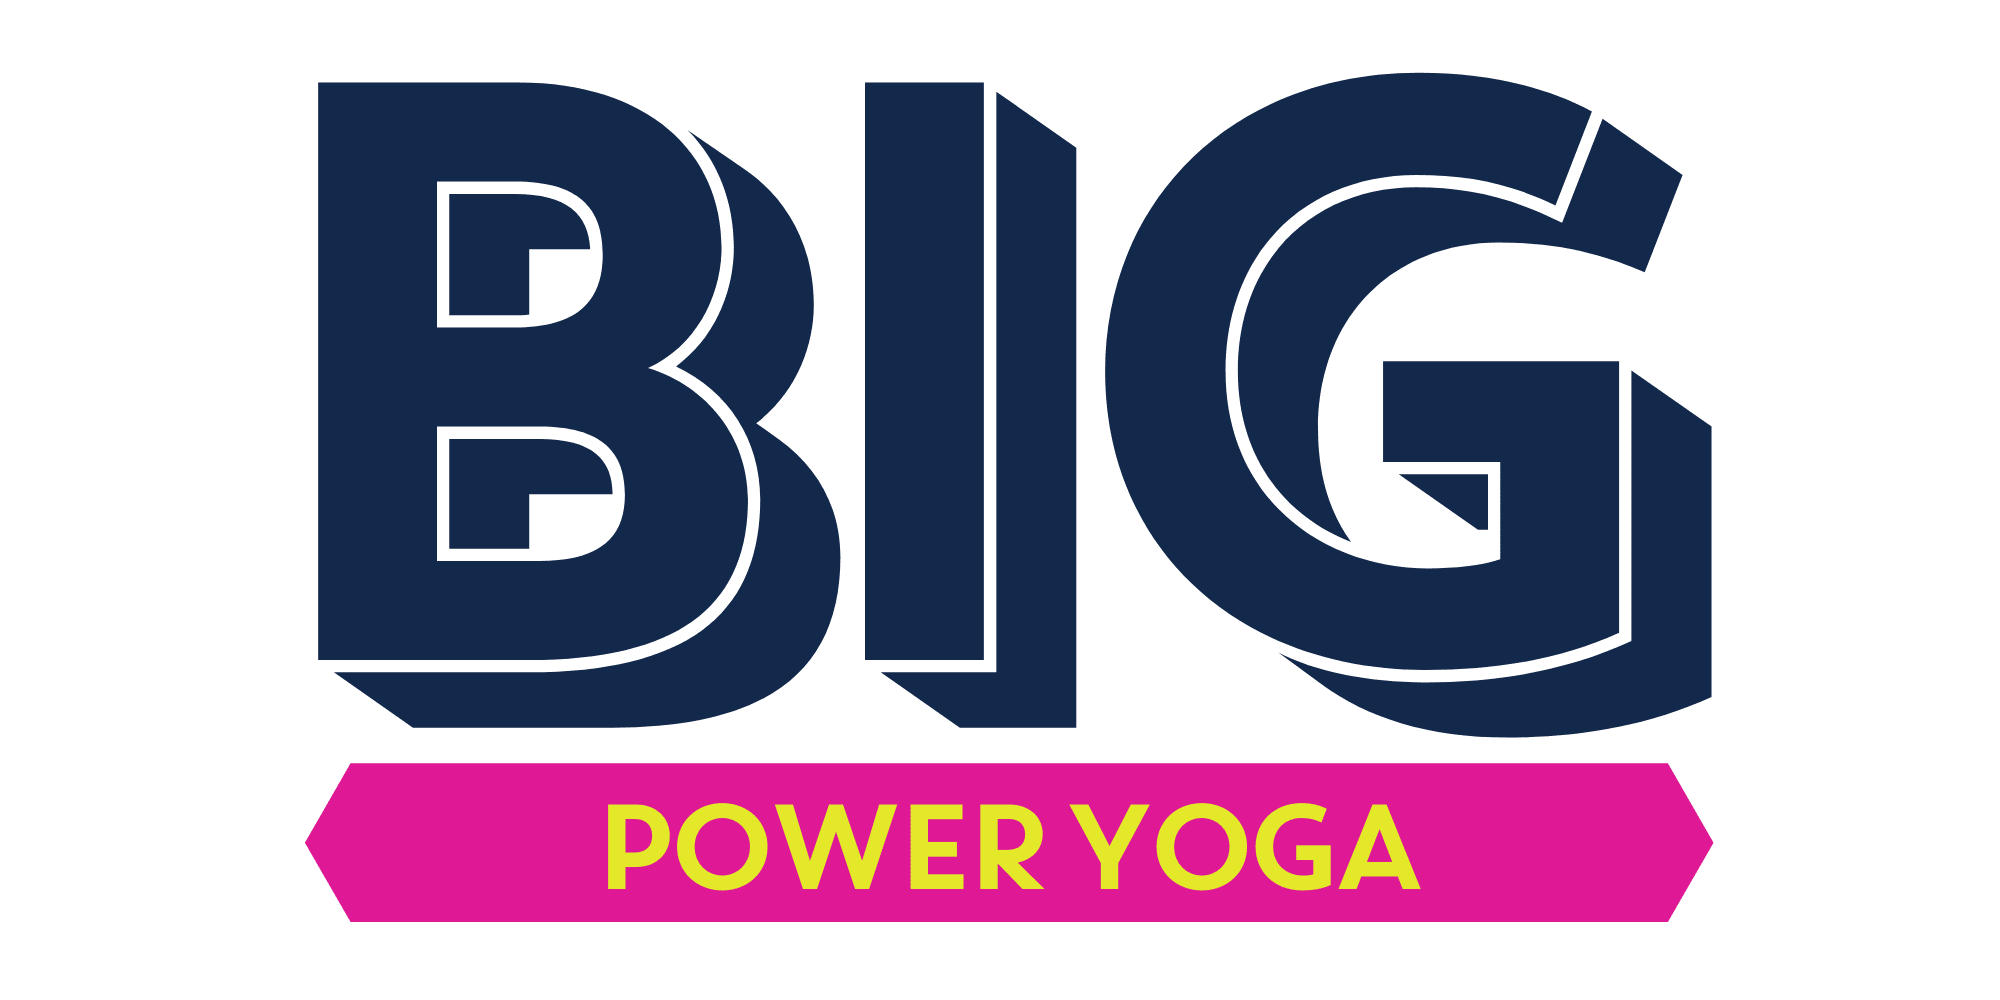 BIG Power Yoga logo